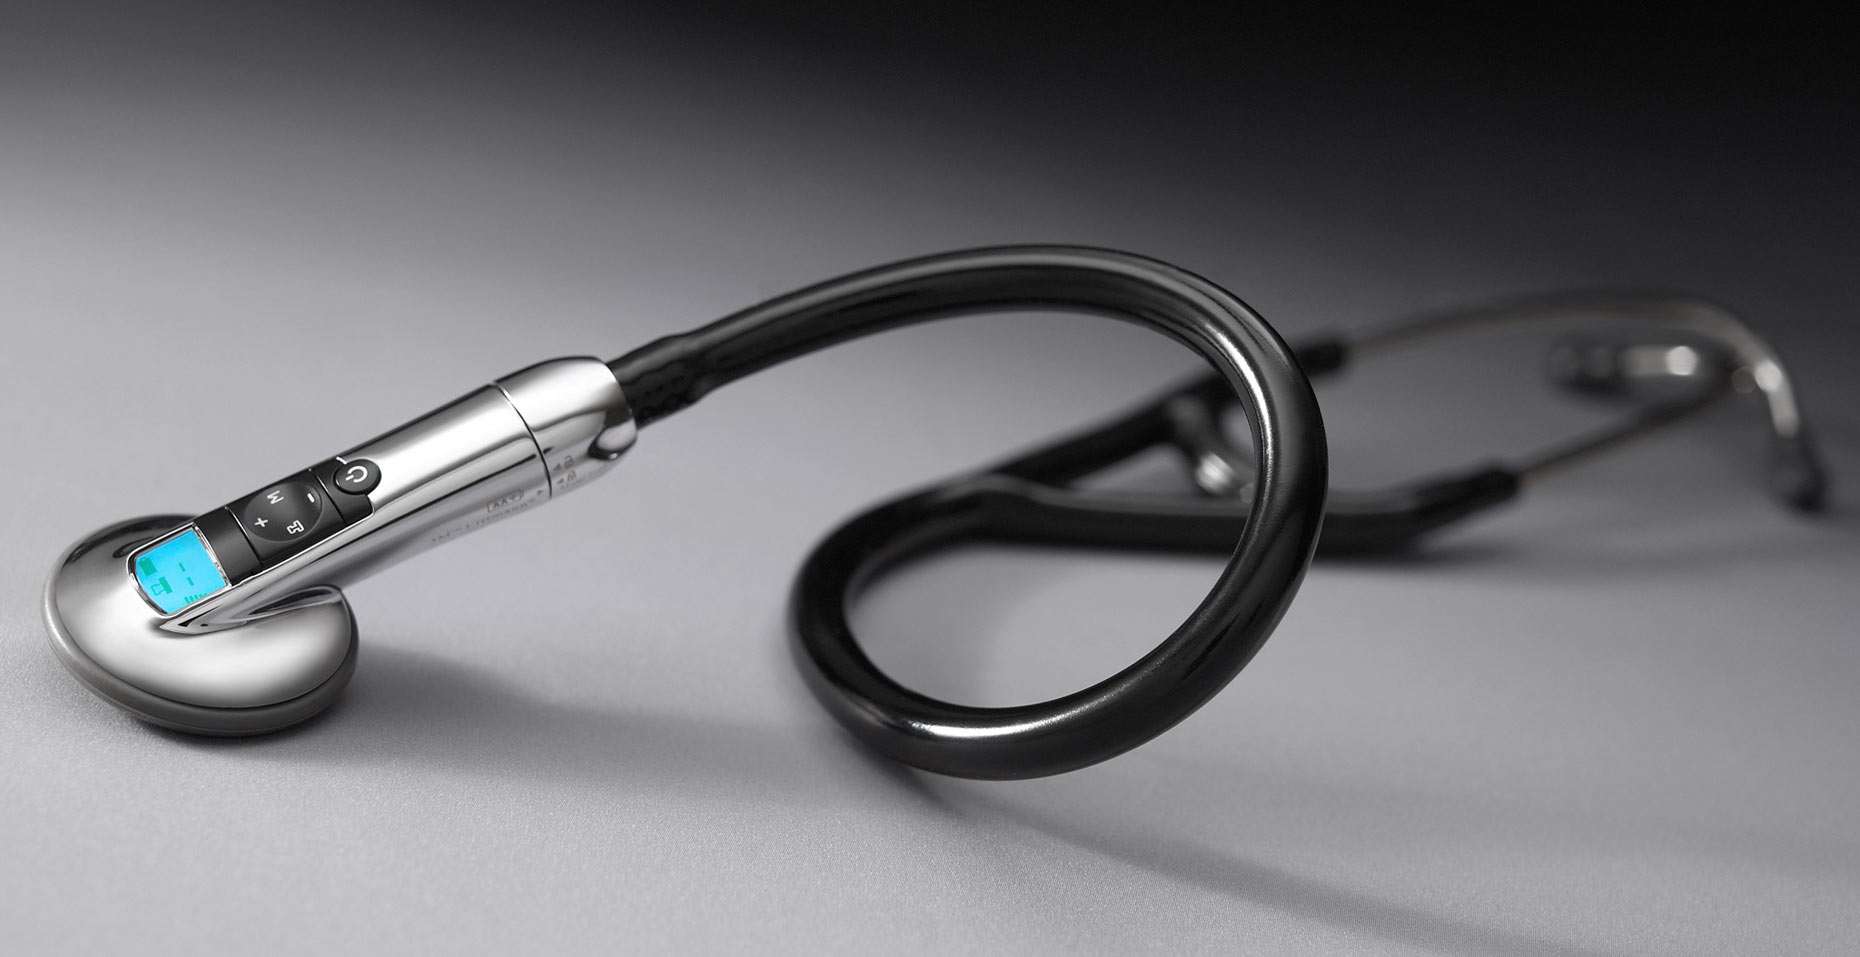 Littmann Stethoscope/silver/digital/medical/product photo/InsideOut Studios